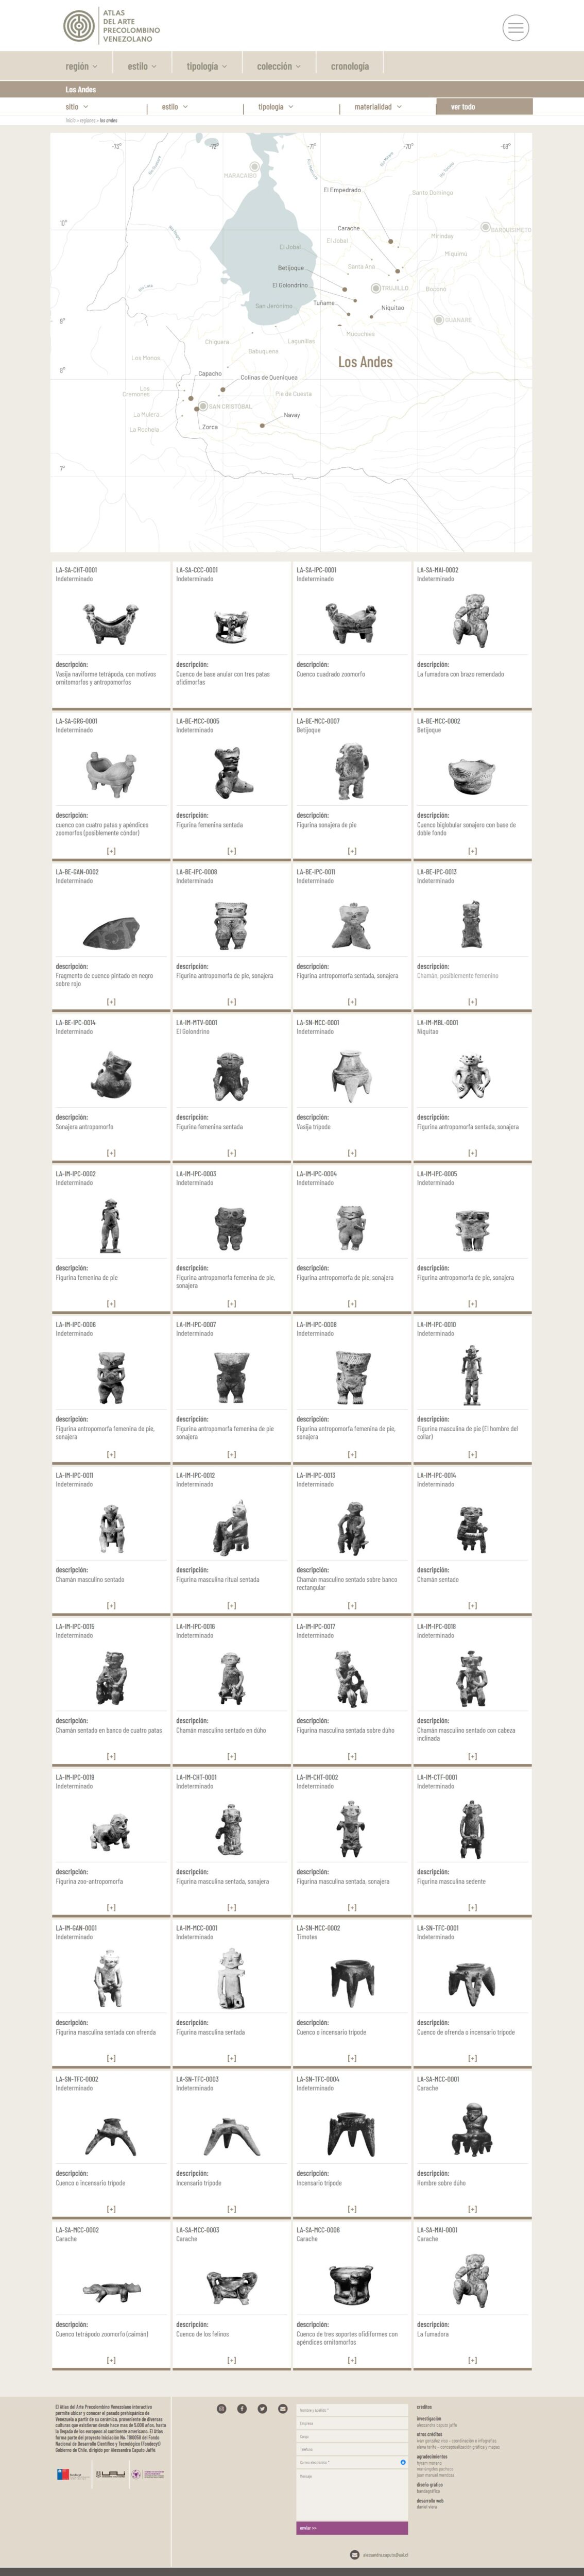 Atlas del Arte Precolombino Venezolano | The interactive Atlas of Pre-Columbian Venezuelan Art allows you to locate and learn about the pre-Hispanic past of Venezuela from its ceramics. Developed for WordPress with bootstrap.